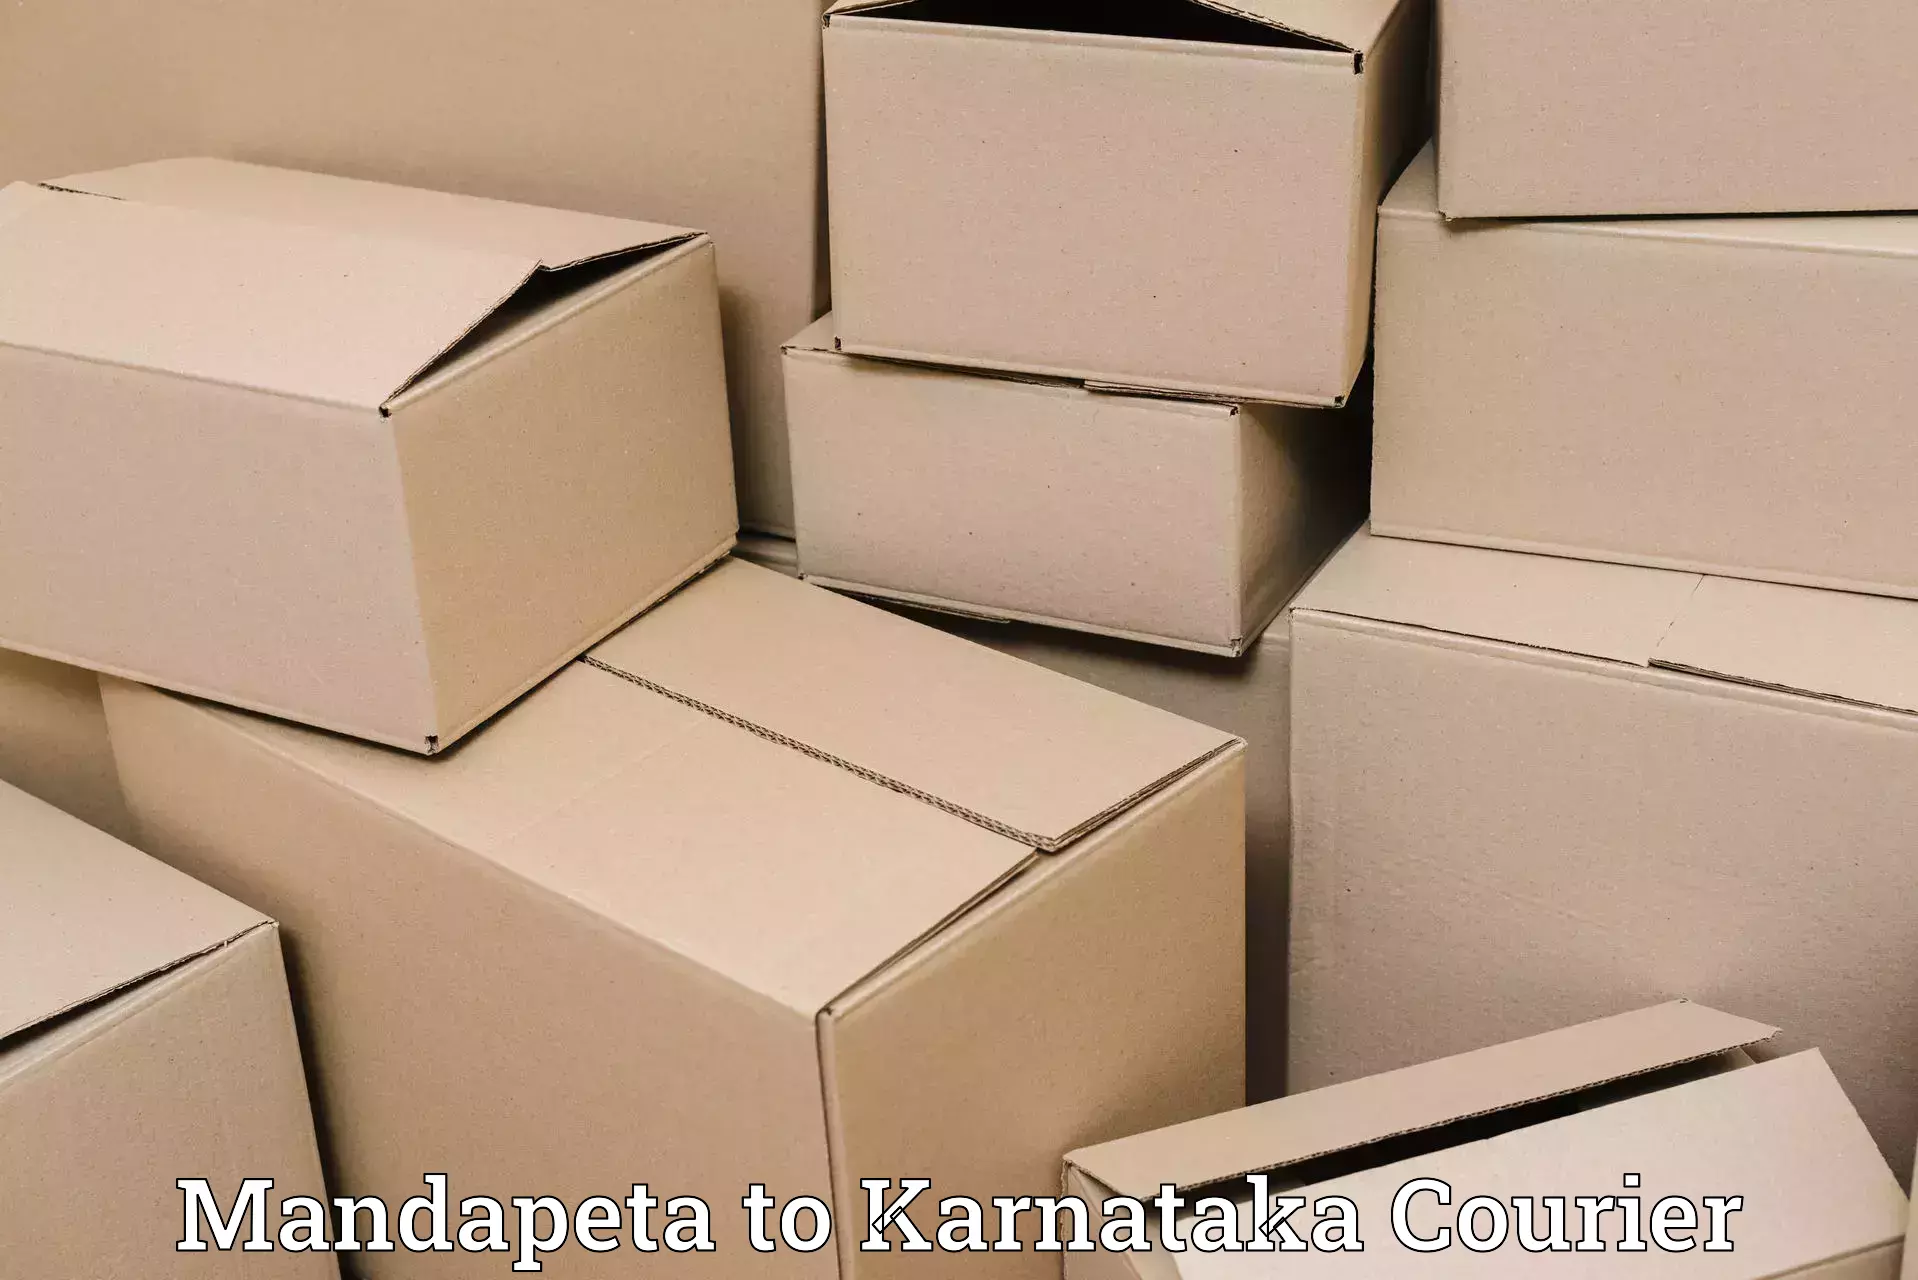 Quick dispatch service Mandapeta to Yelburga